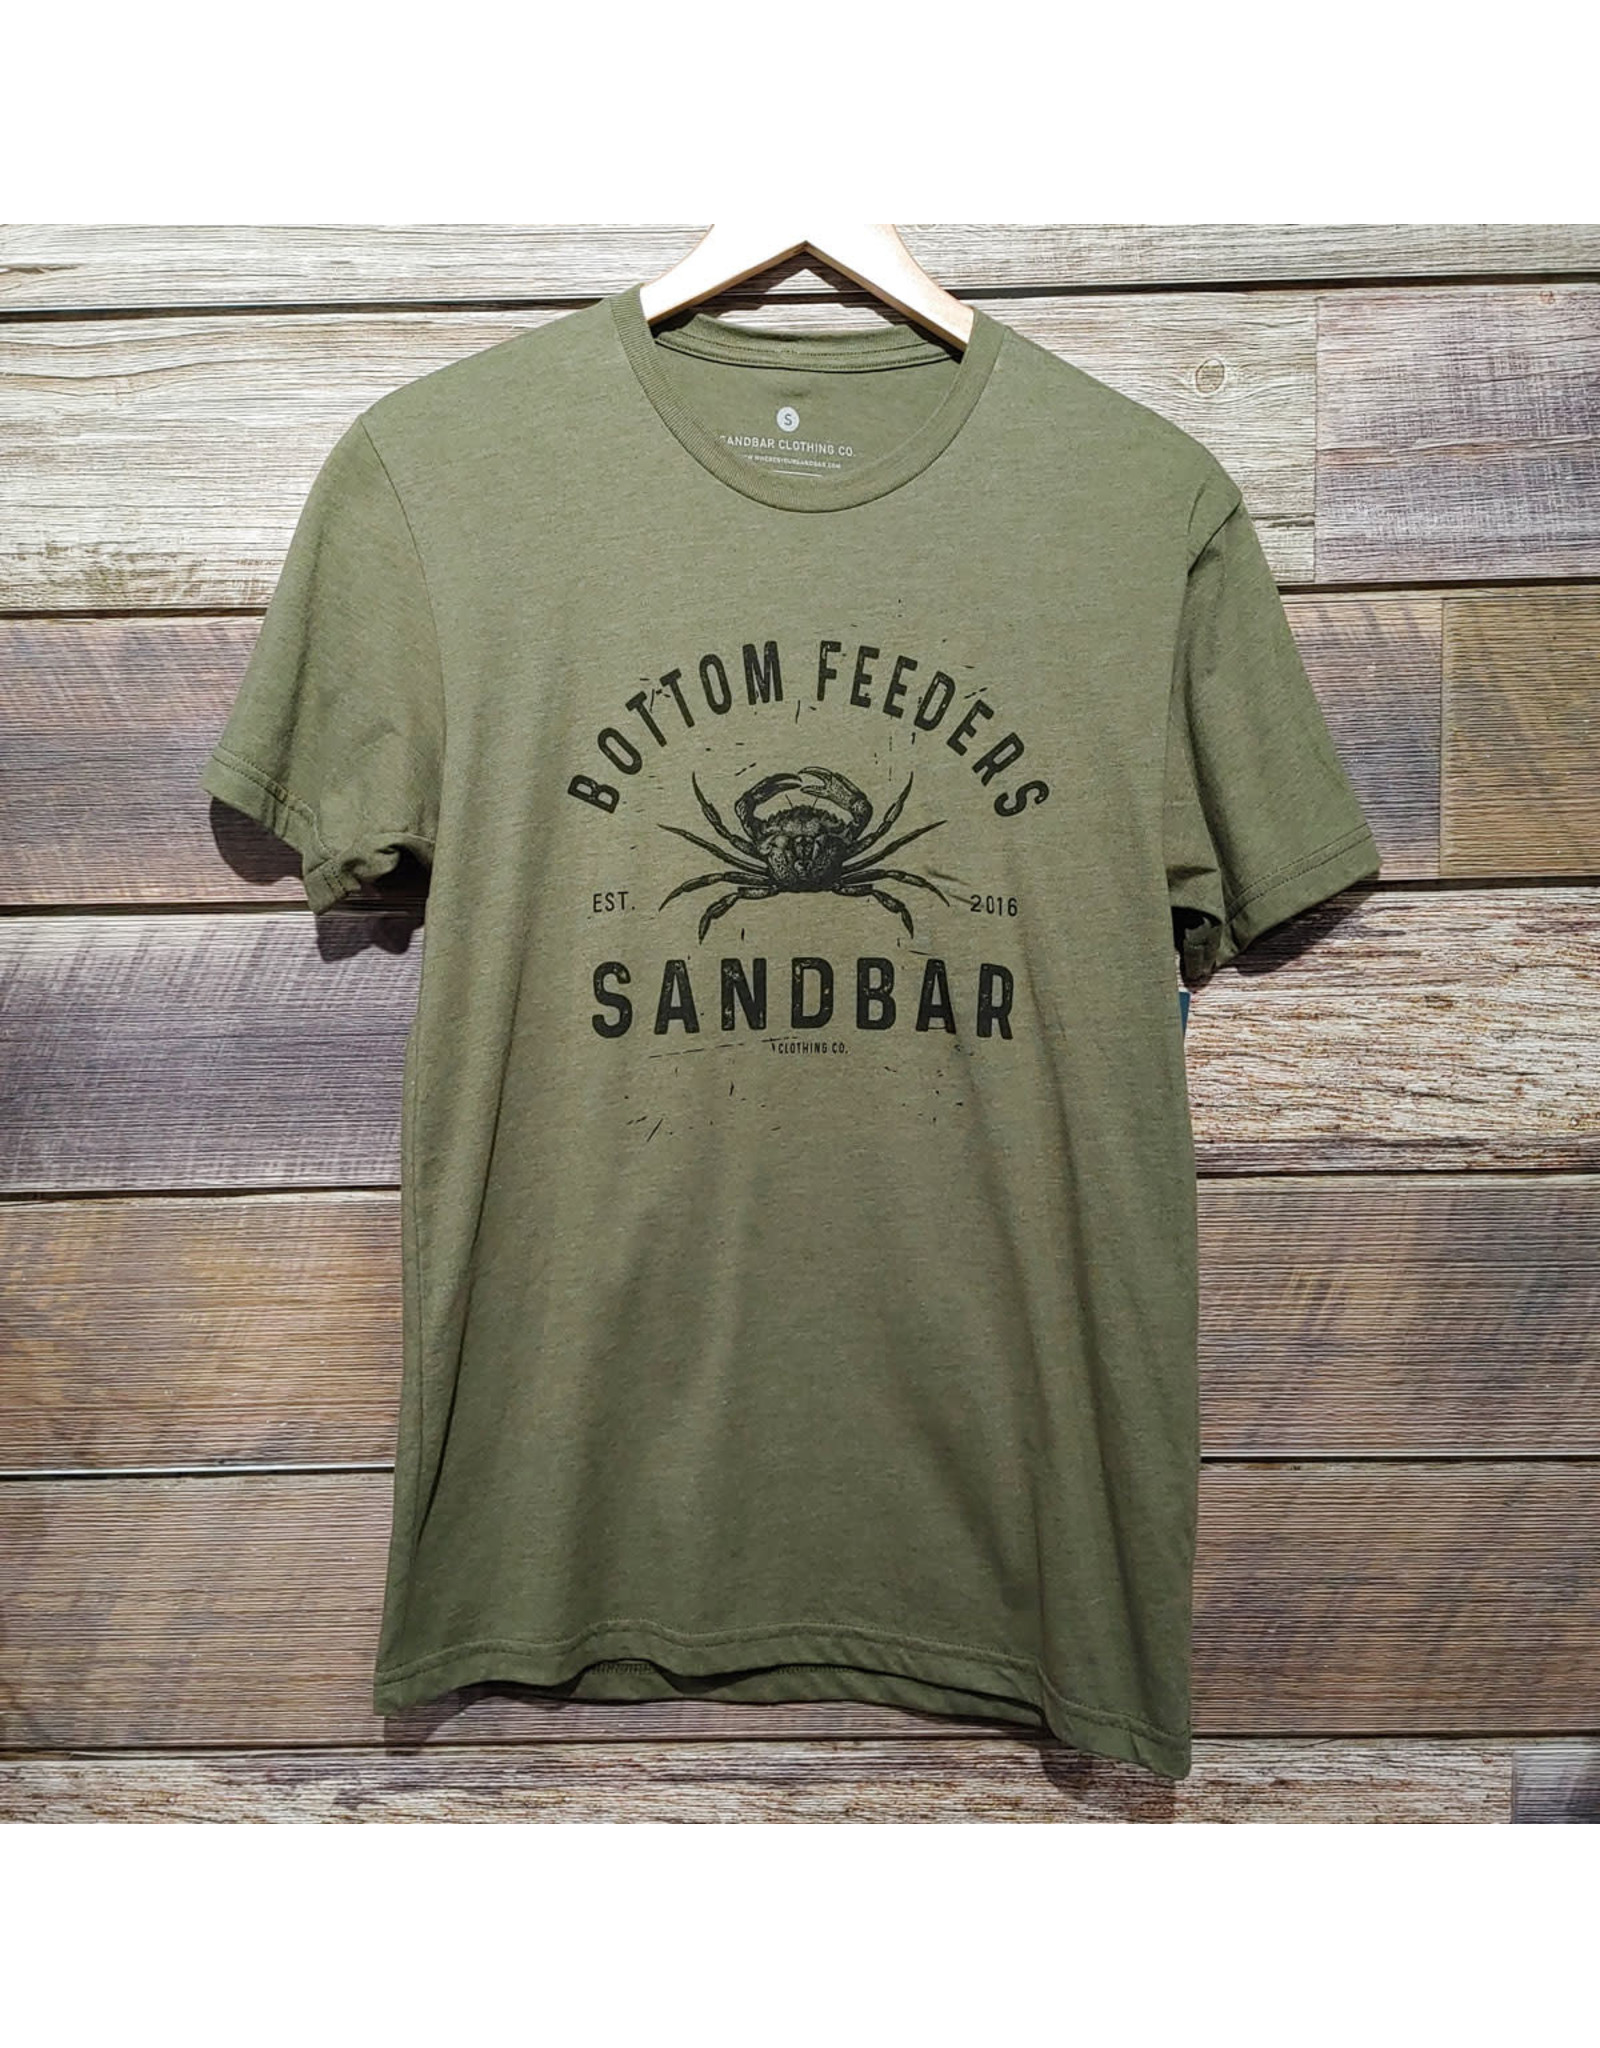 Sandbar Apparel Co Sandbar Bottom Feeders OD Green T-shirt